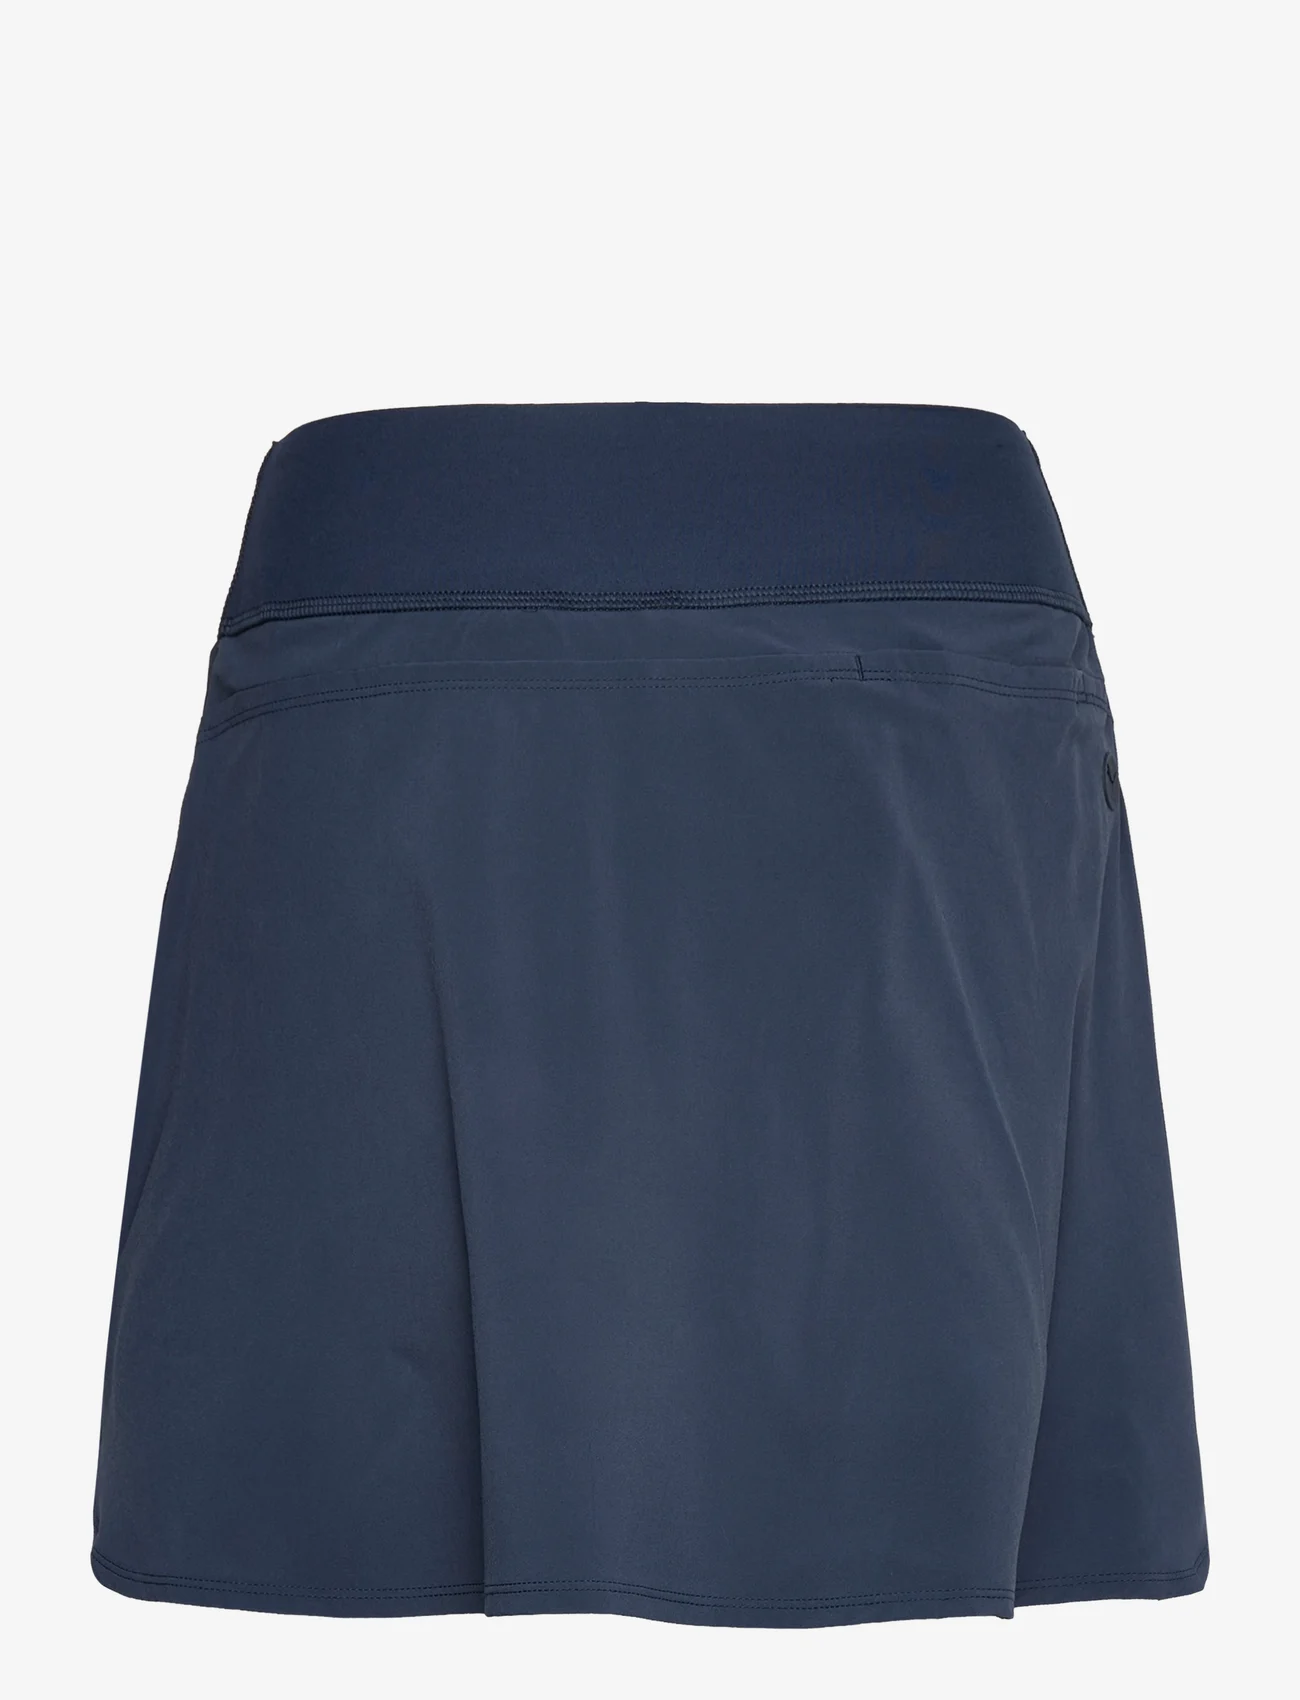 PUMA Golf - PWRSHAPE Solid Skirt - spódnice - navy blazer - 1